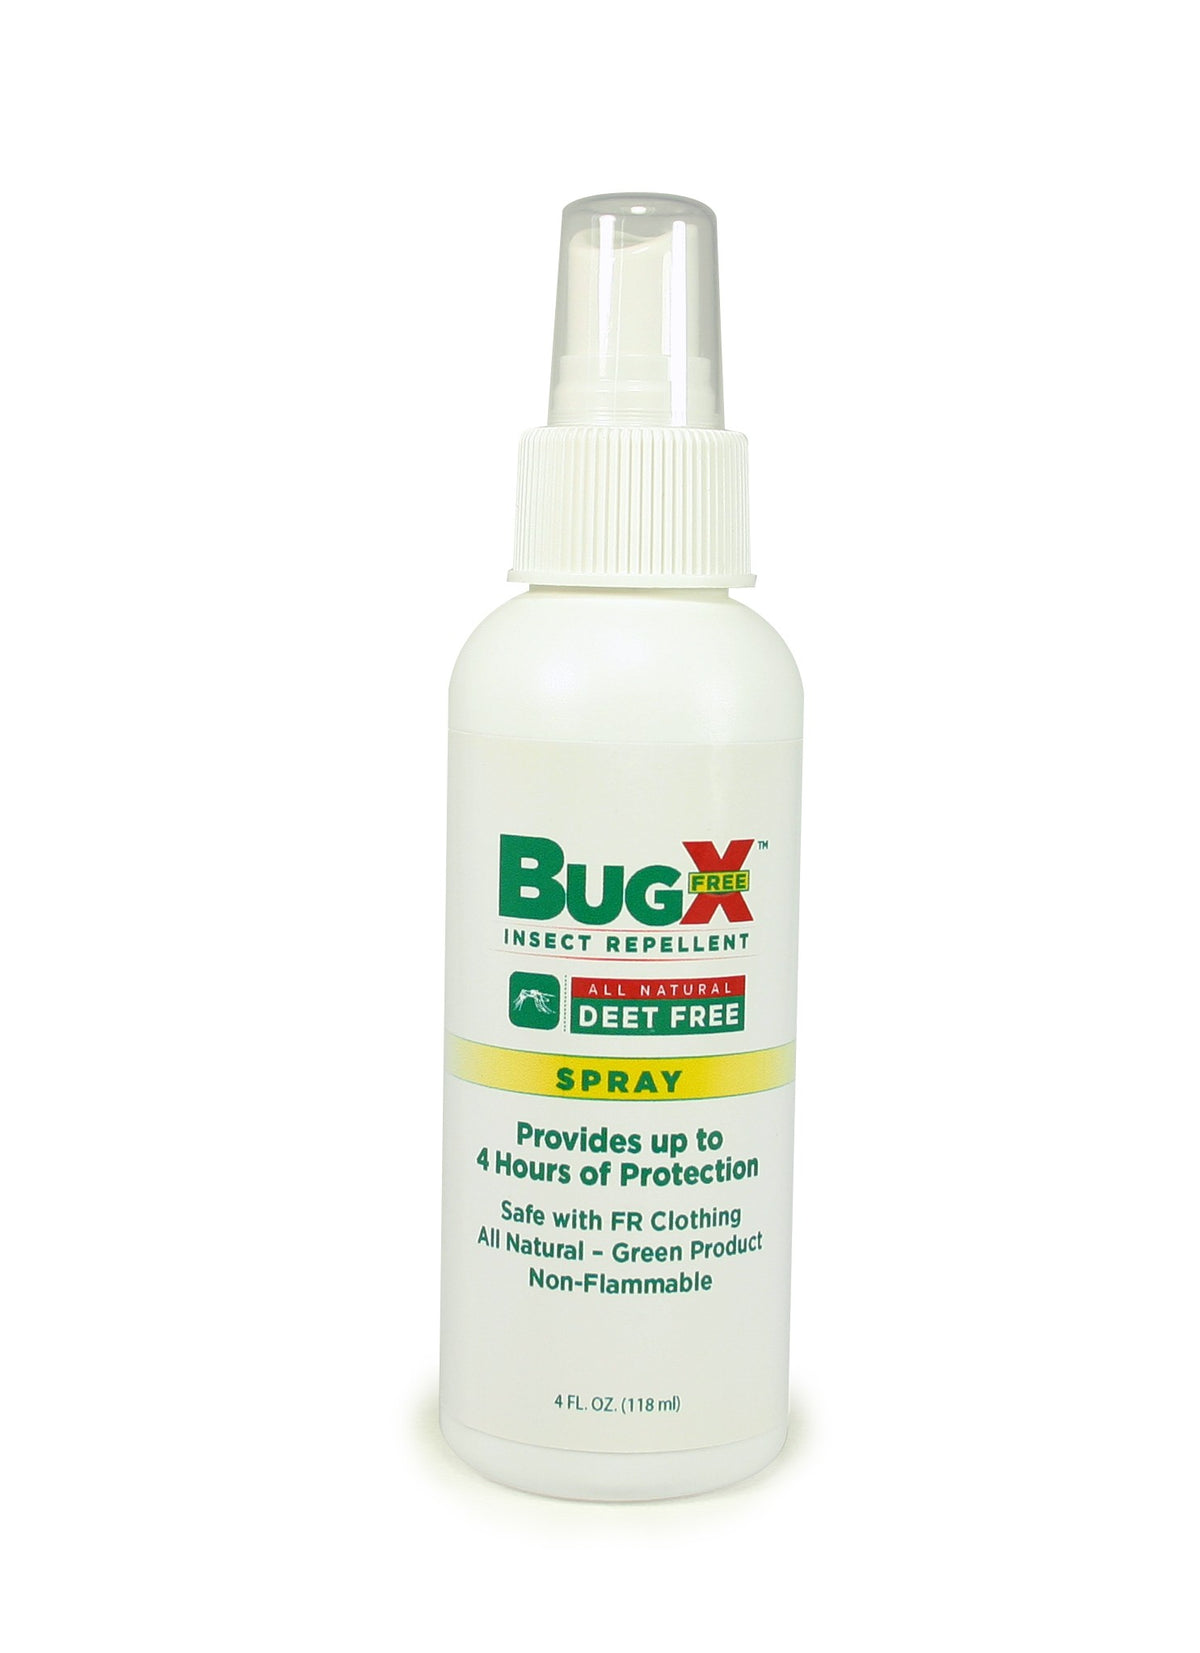 BugX DEET FREE Insect Repellent Spray, 4 Oz. Bottle, Case Of 12 - BS-FAK-18-804-1-FM